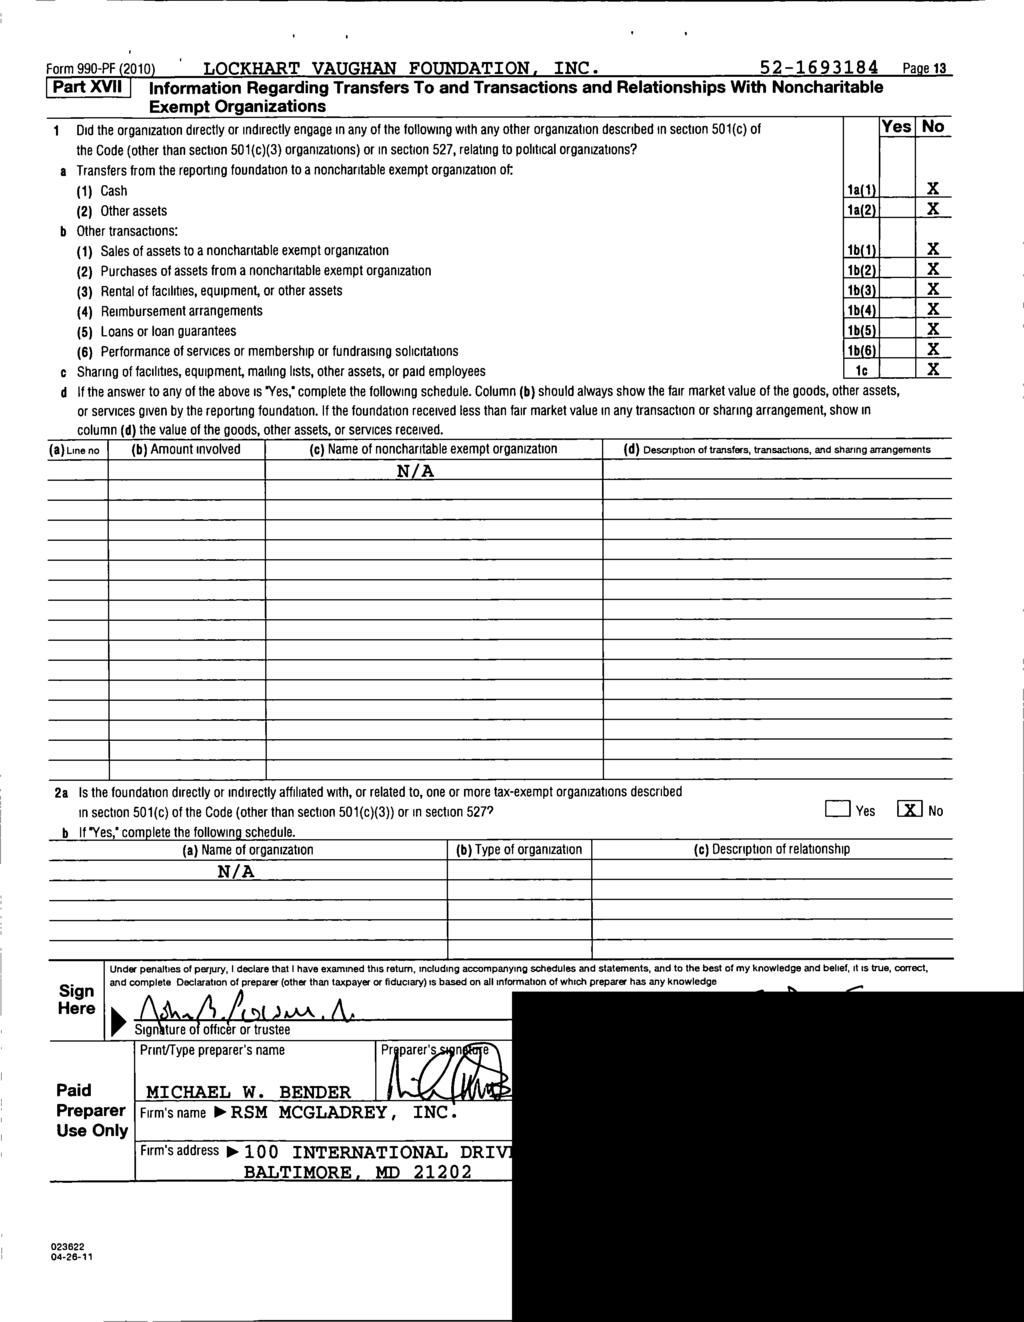 Form 990-PF 2010. LOCKHART VAUGHAN FOUNDATION, INC.